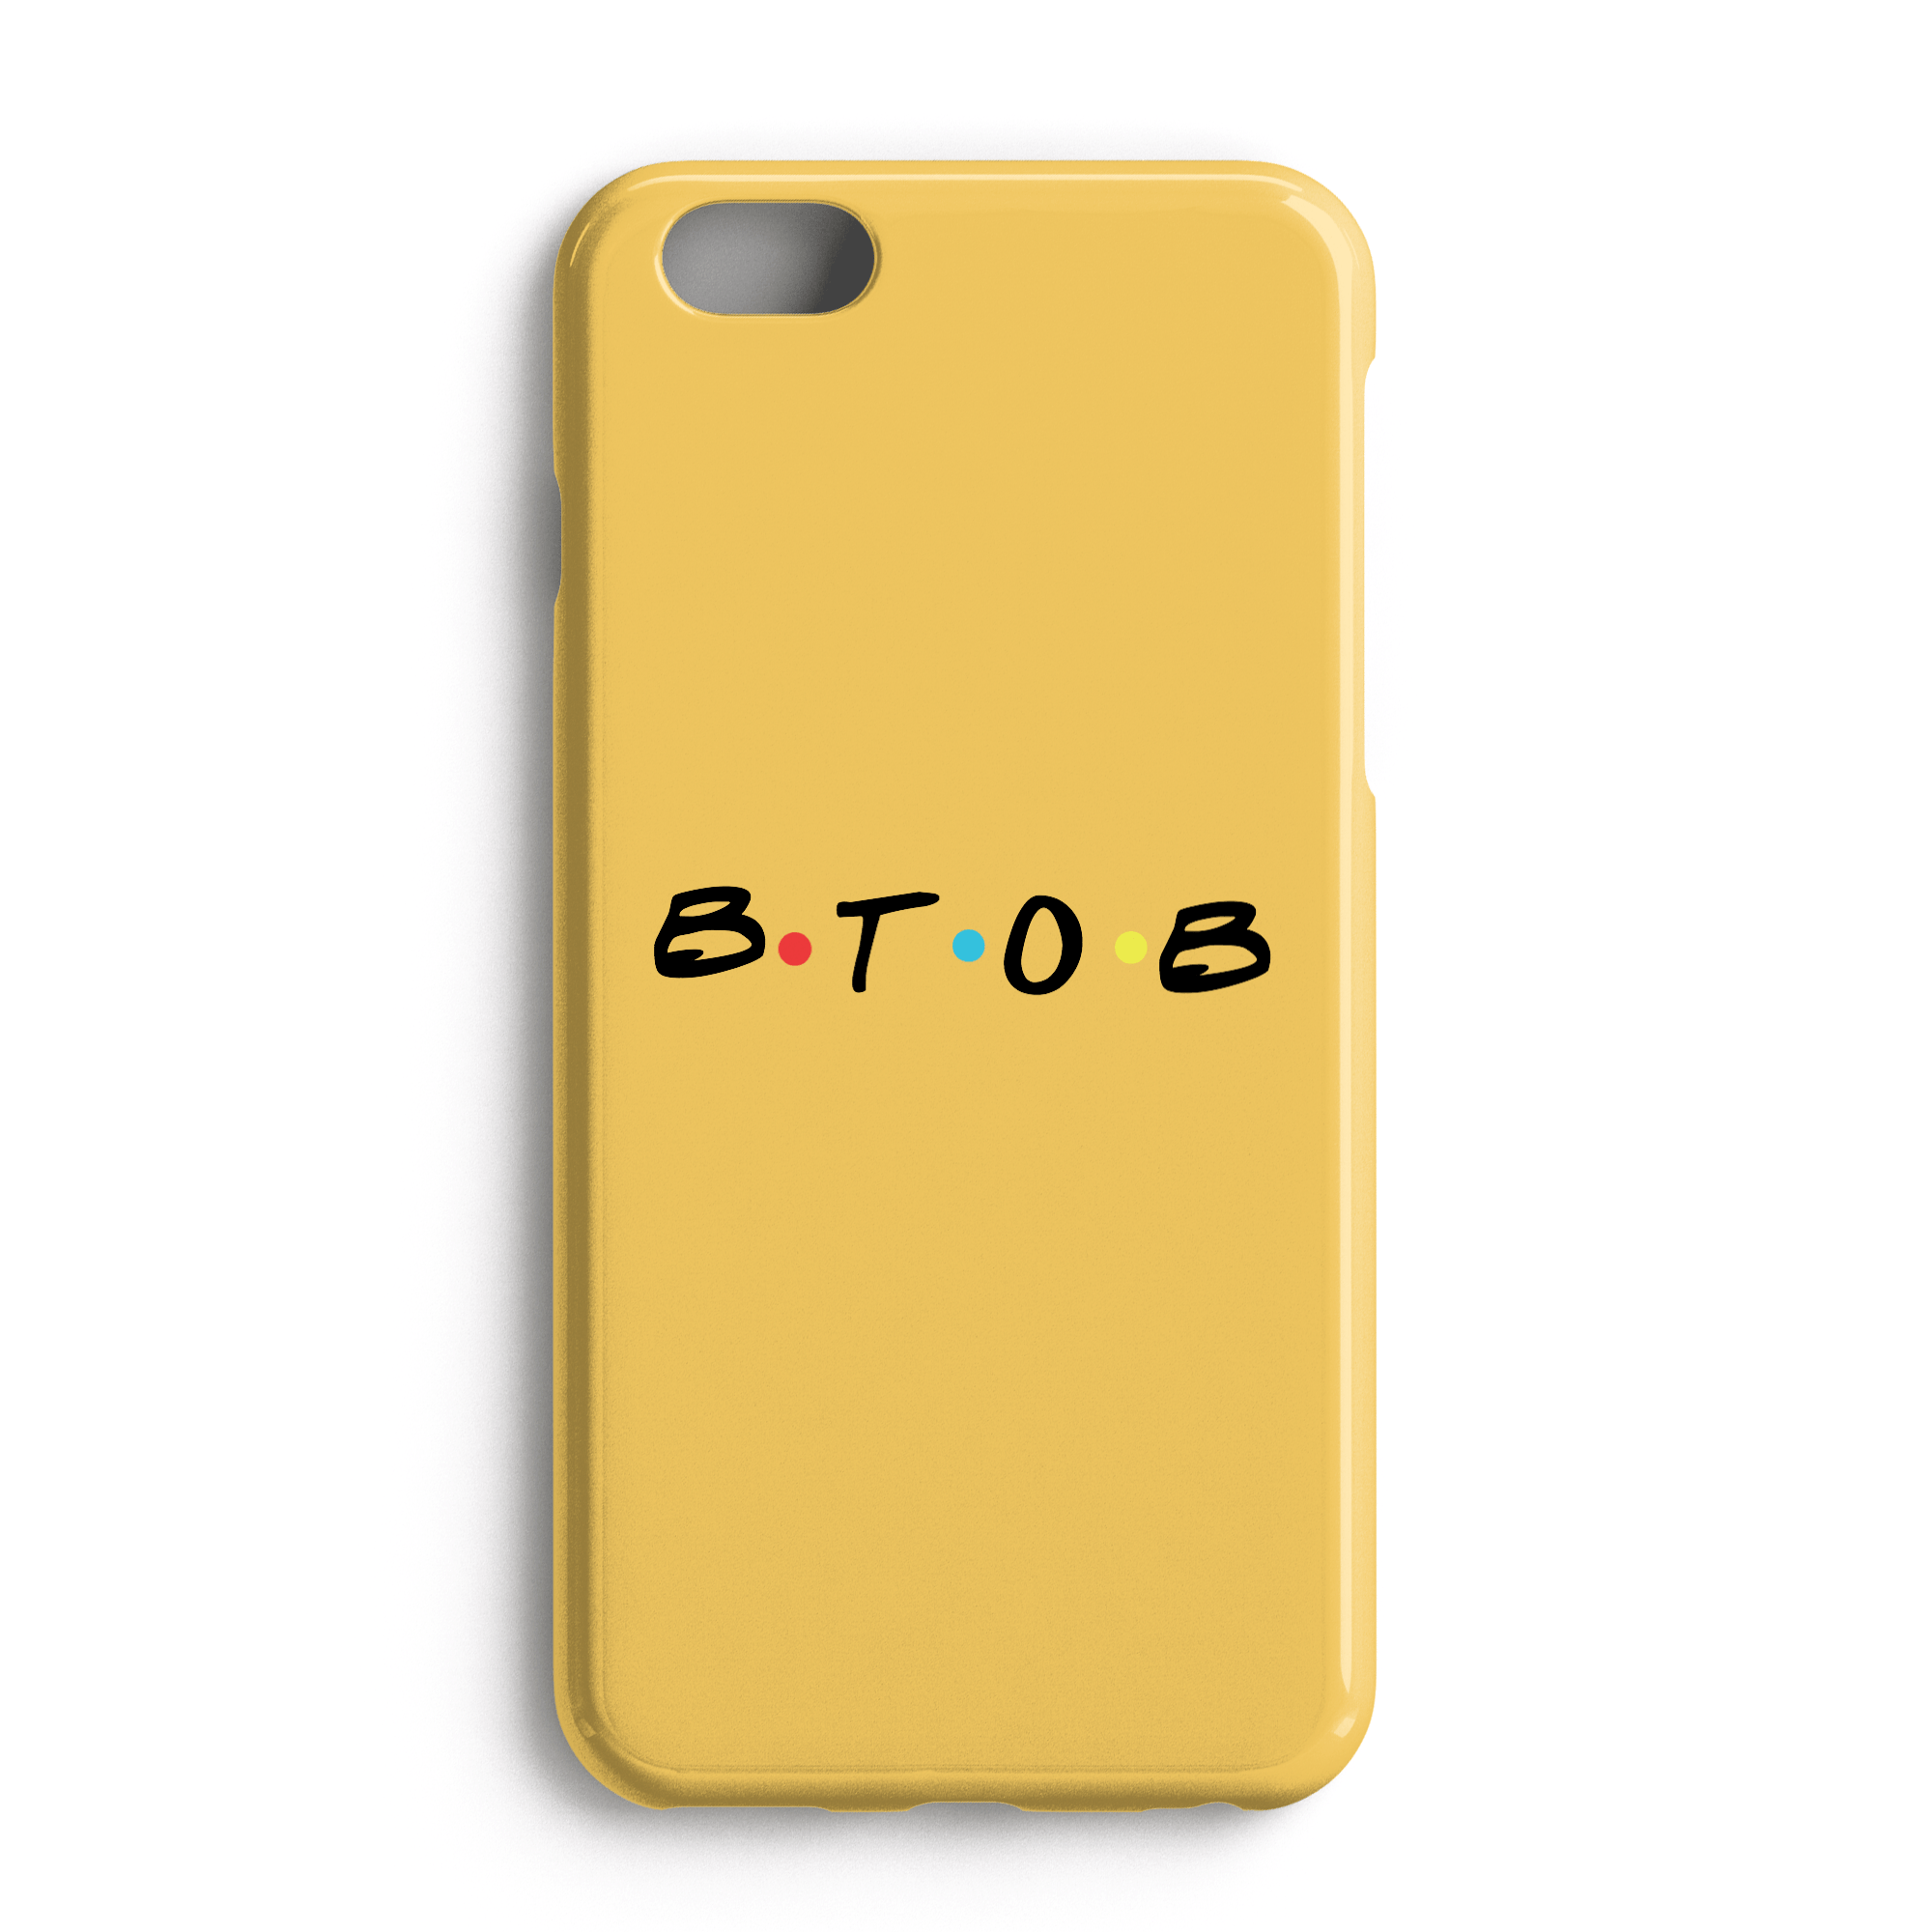 Btob Logo - BTOB] FRIENDS SHOW INSPIRED LOGO - DaebakCases